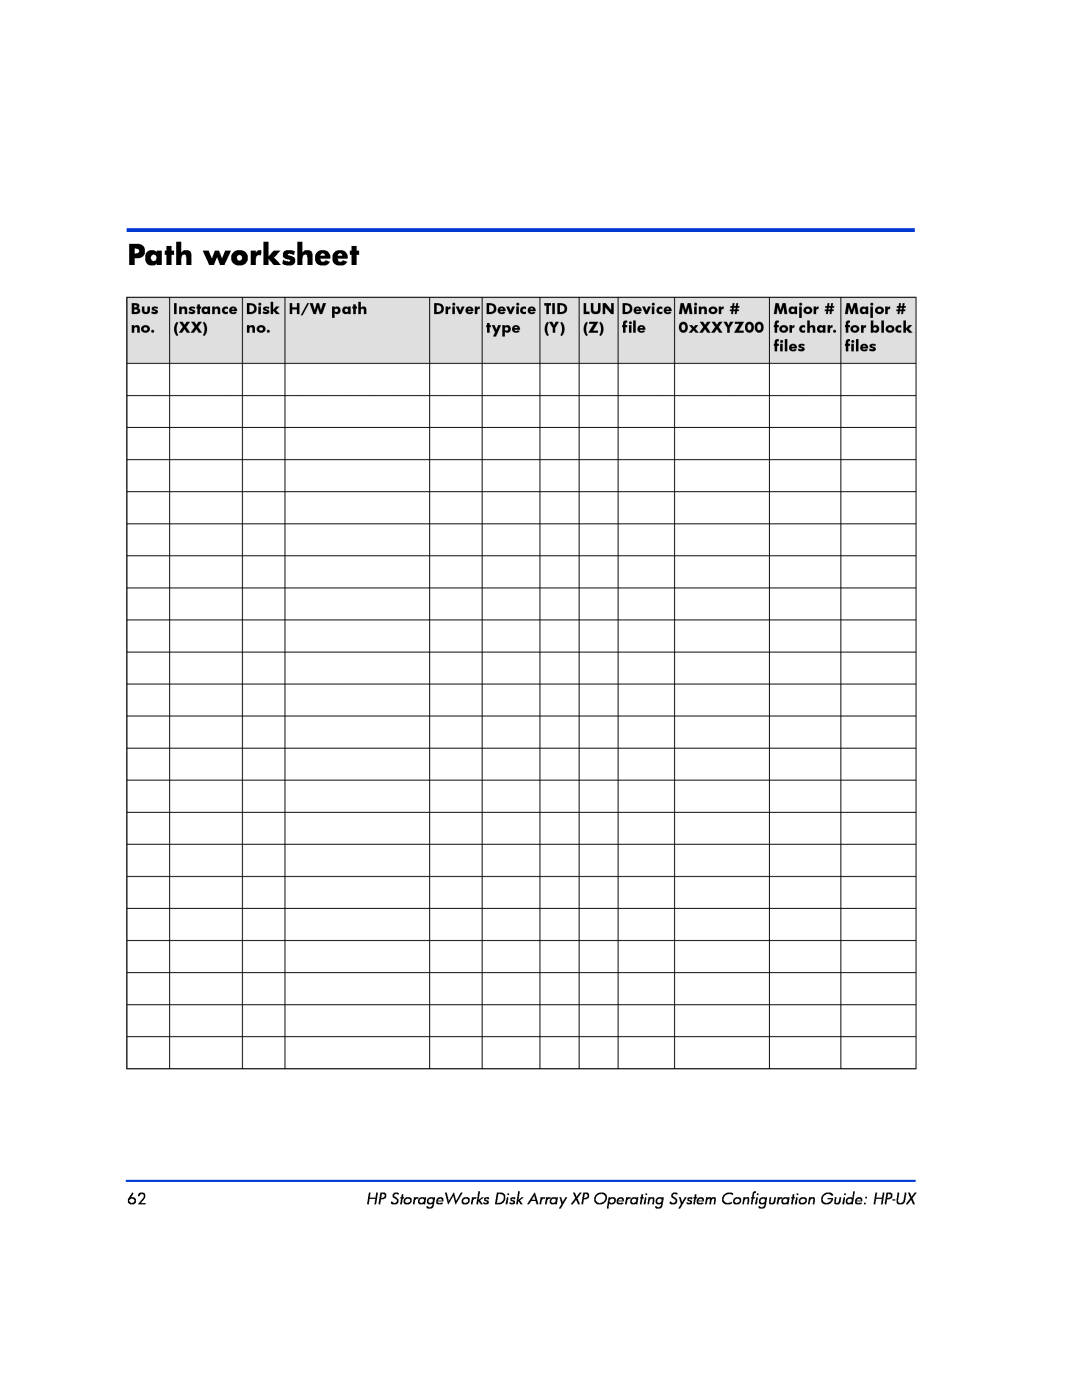 HP XP128, XP10000 manual Path worksheet 